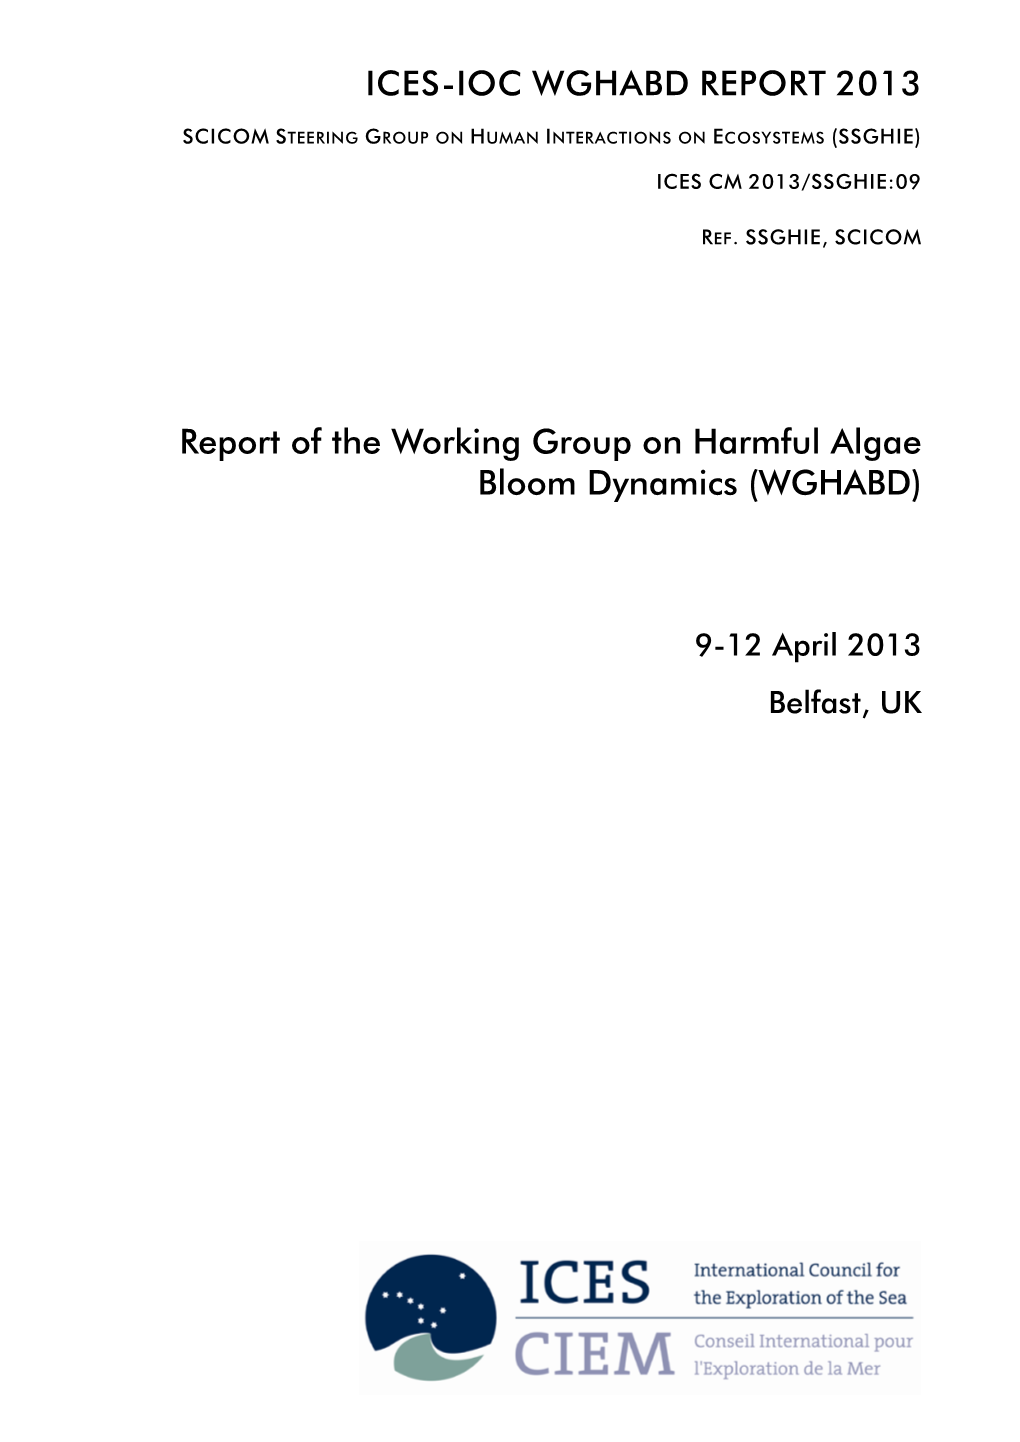 Report of the Working Group on Harmful Algae Bloom Dynamics (WGHABD)